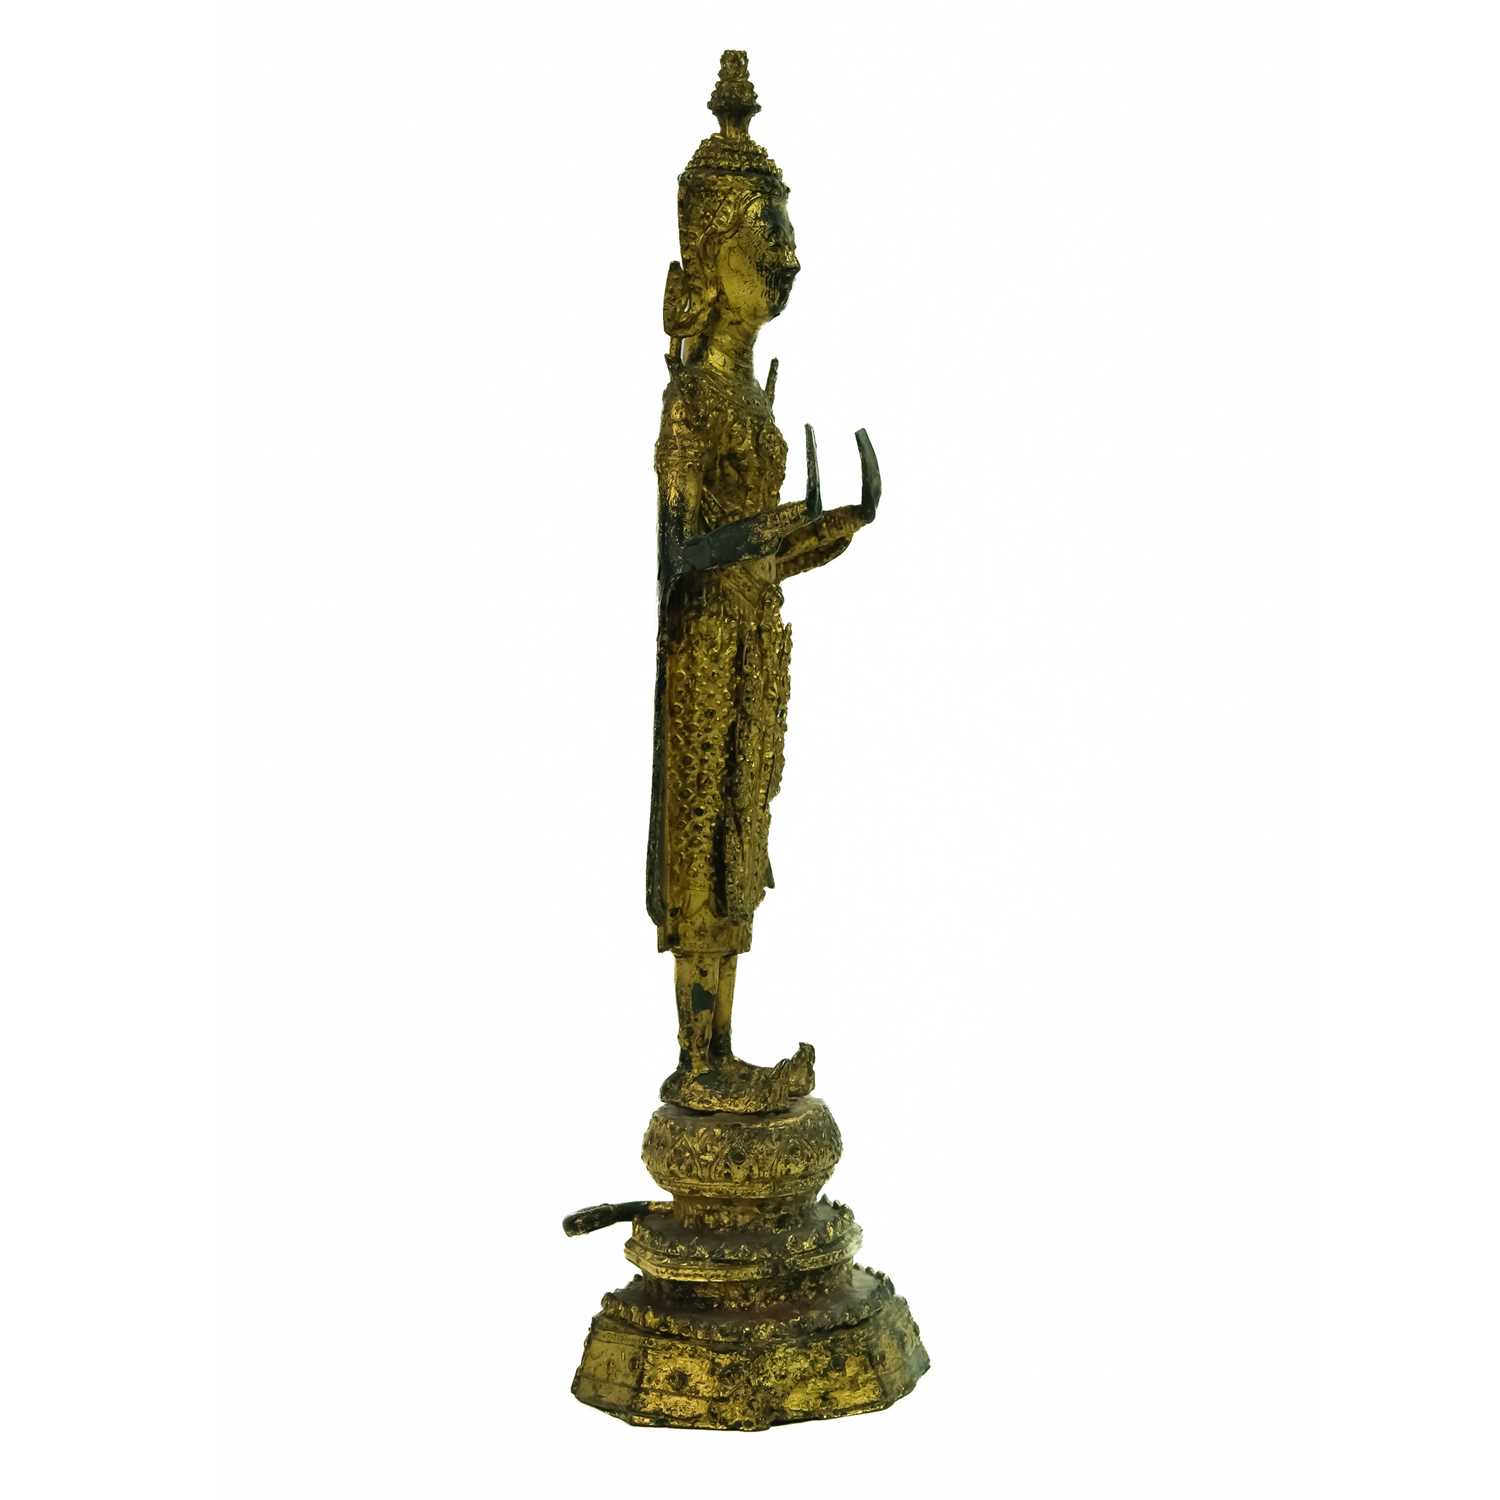 A Thai gilt bronze standing Buddha in royal attire, 18th/19th century. - Image 4 of 6